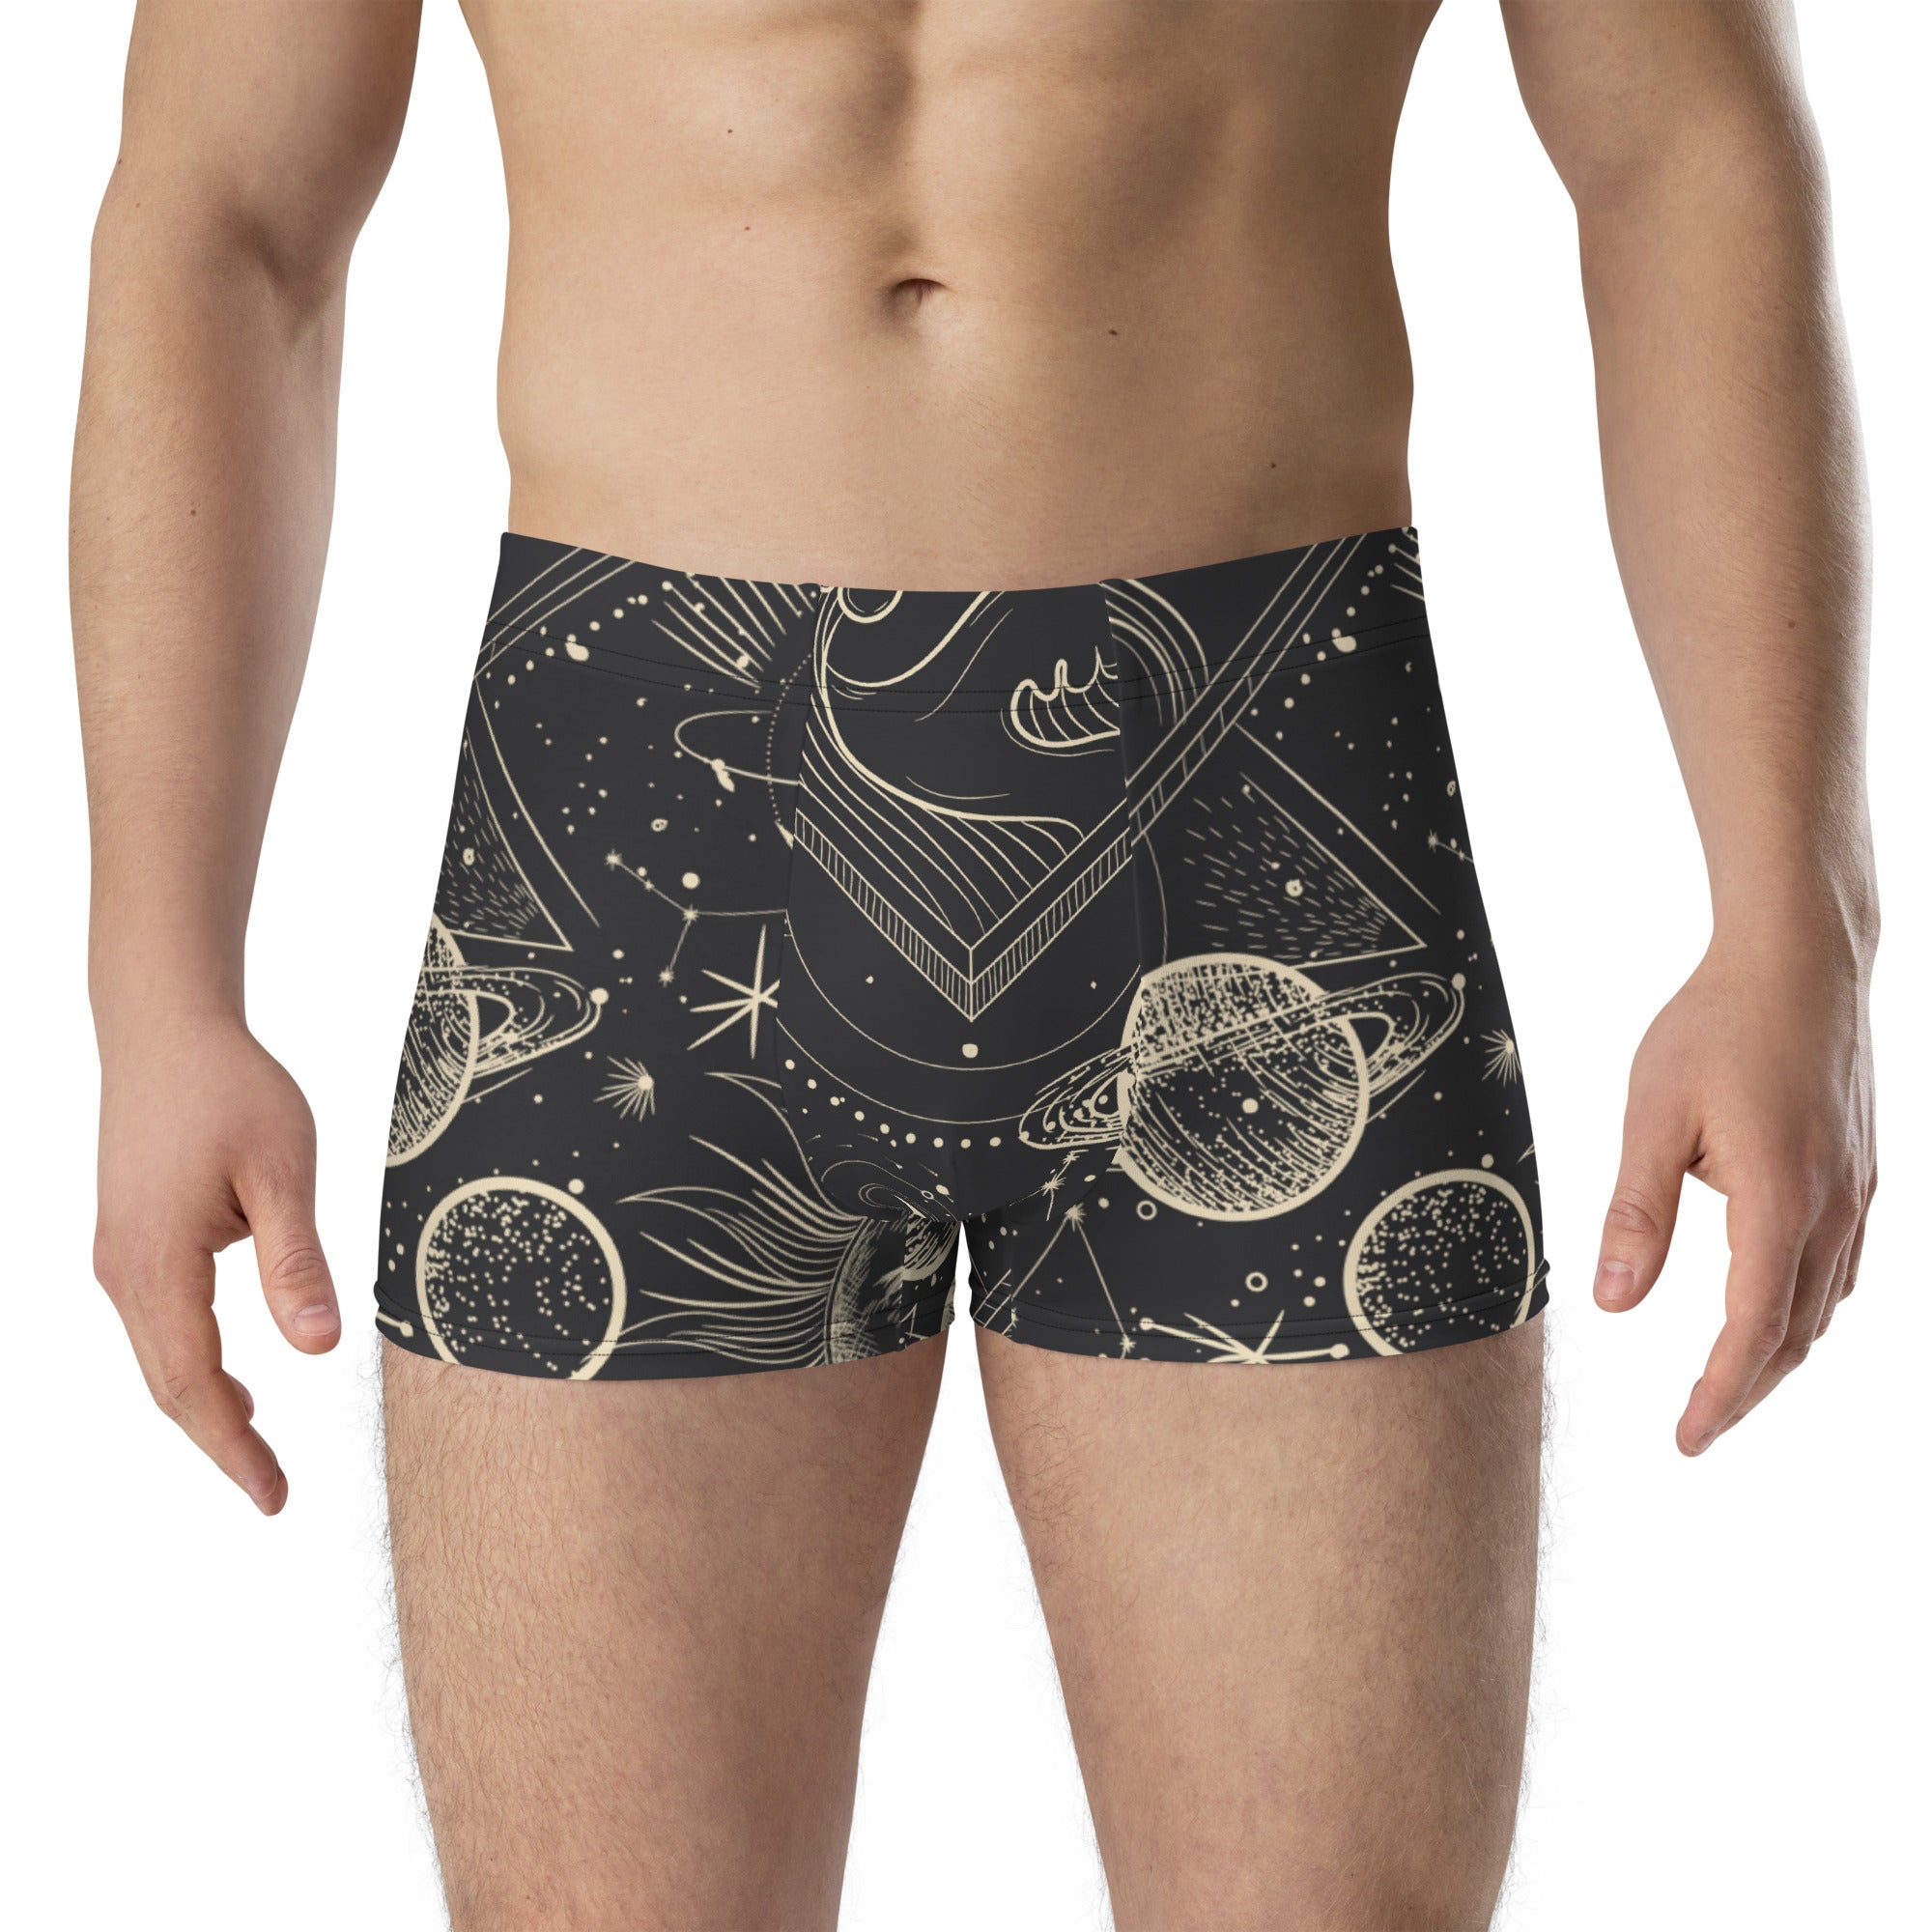 Premium-quality men's space underwear with a vibrant print